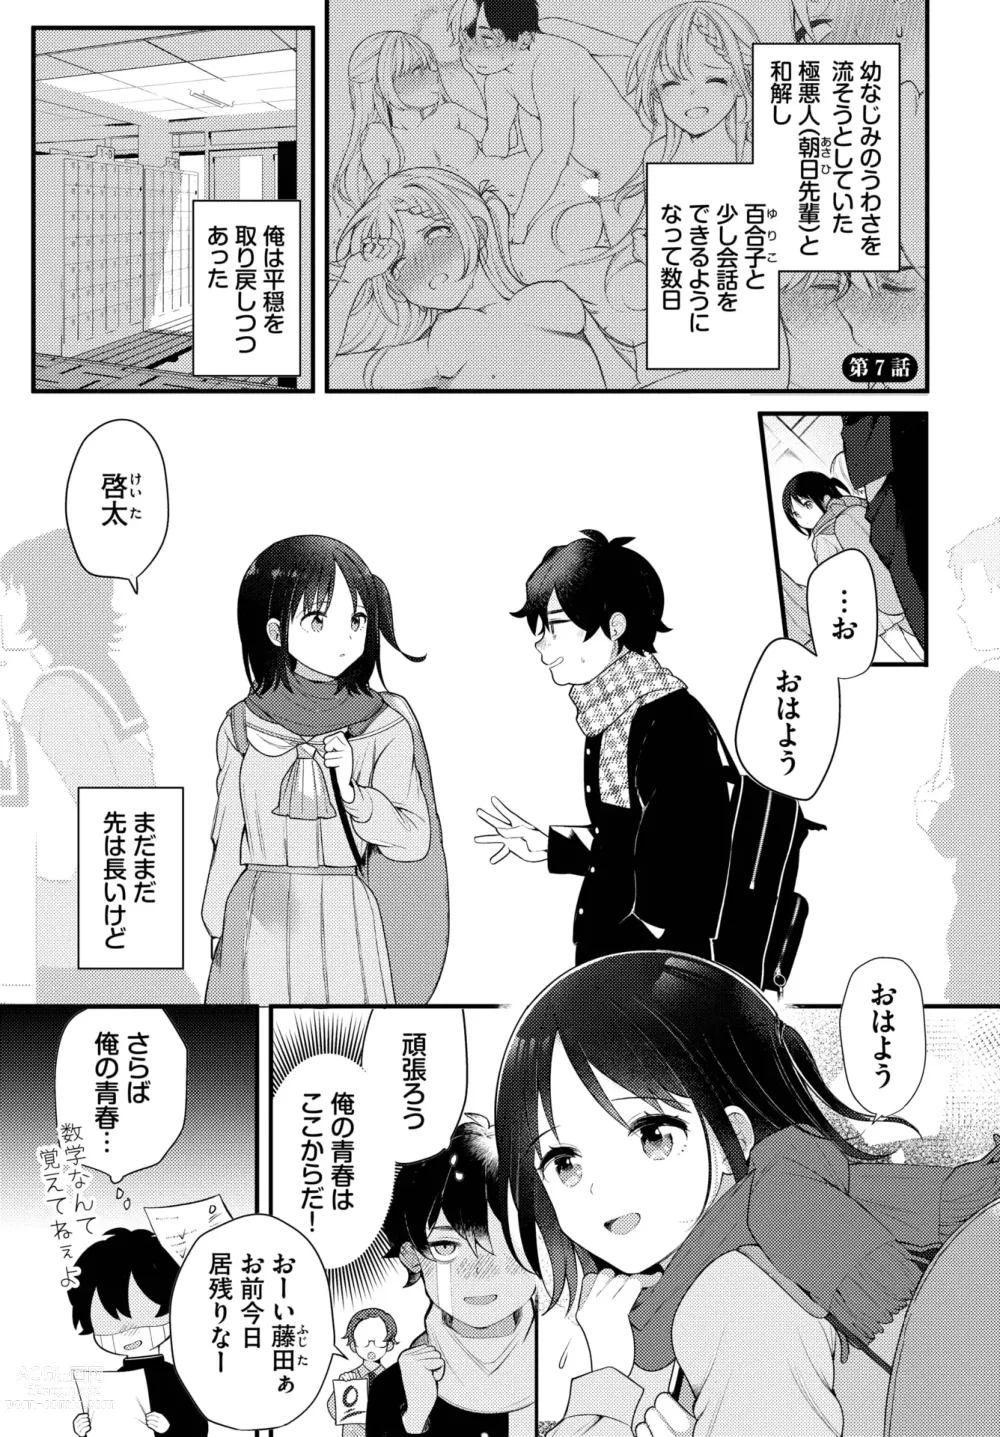 Page 4 of manga Dascomi Vol.25